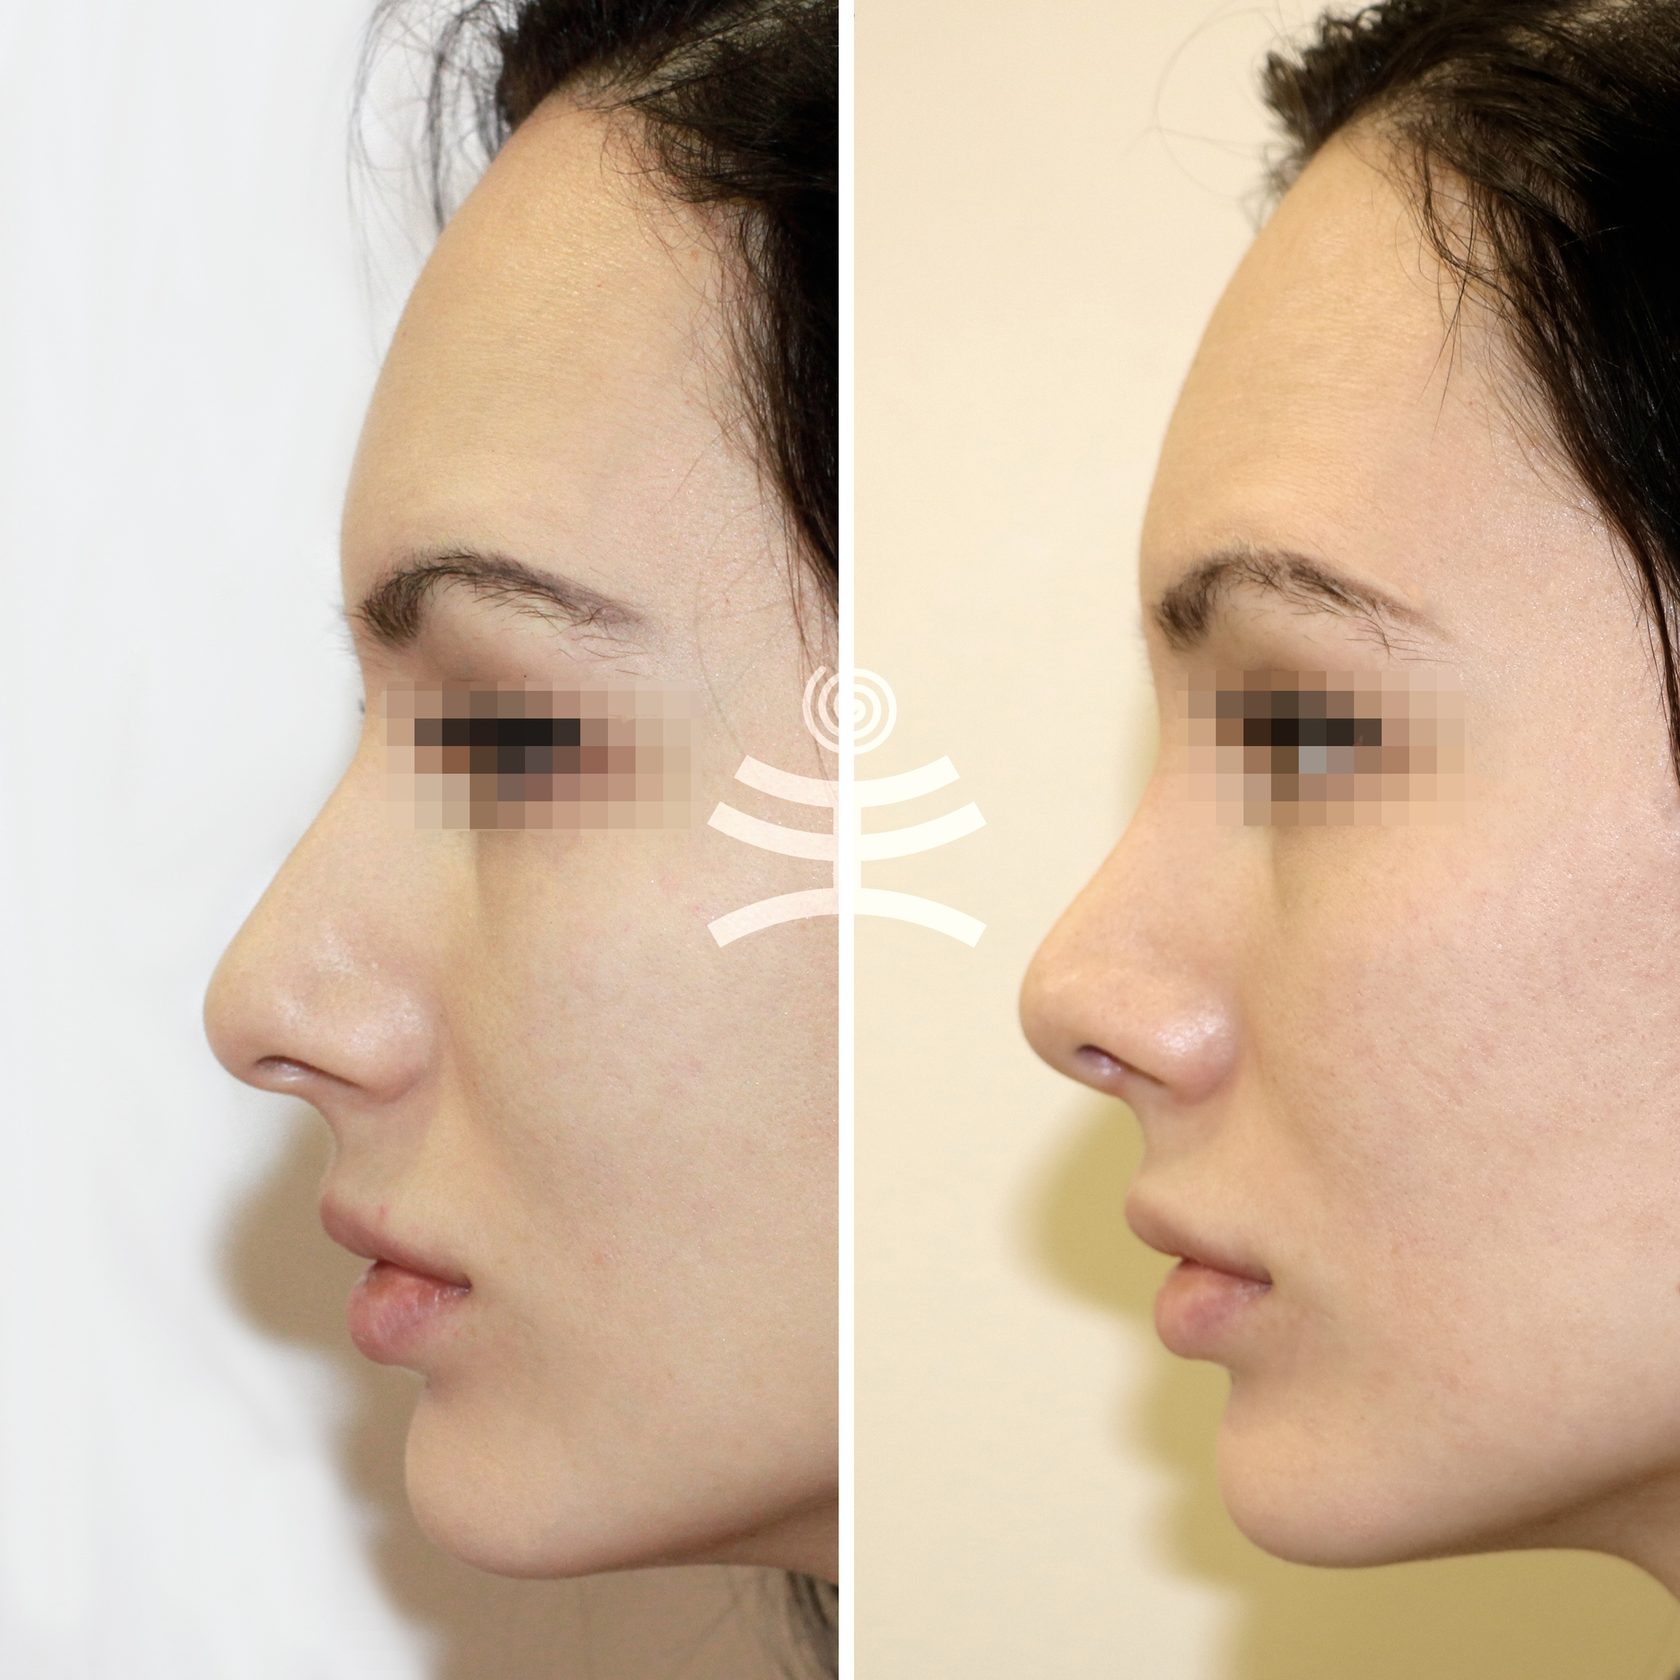 Ринопластика широкого носа: особенности операции